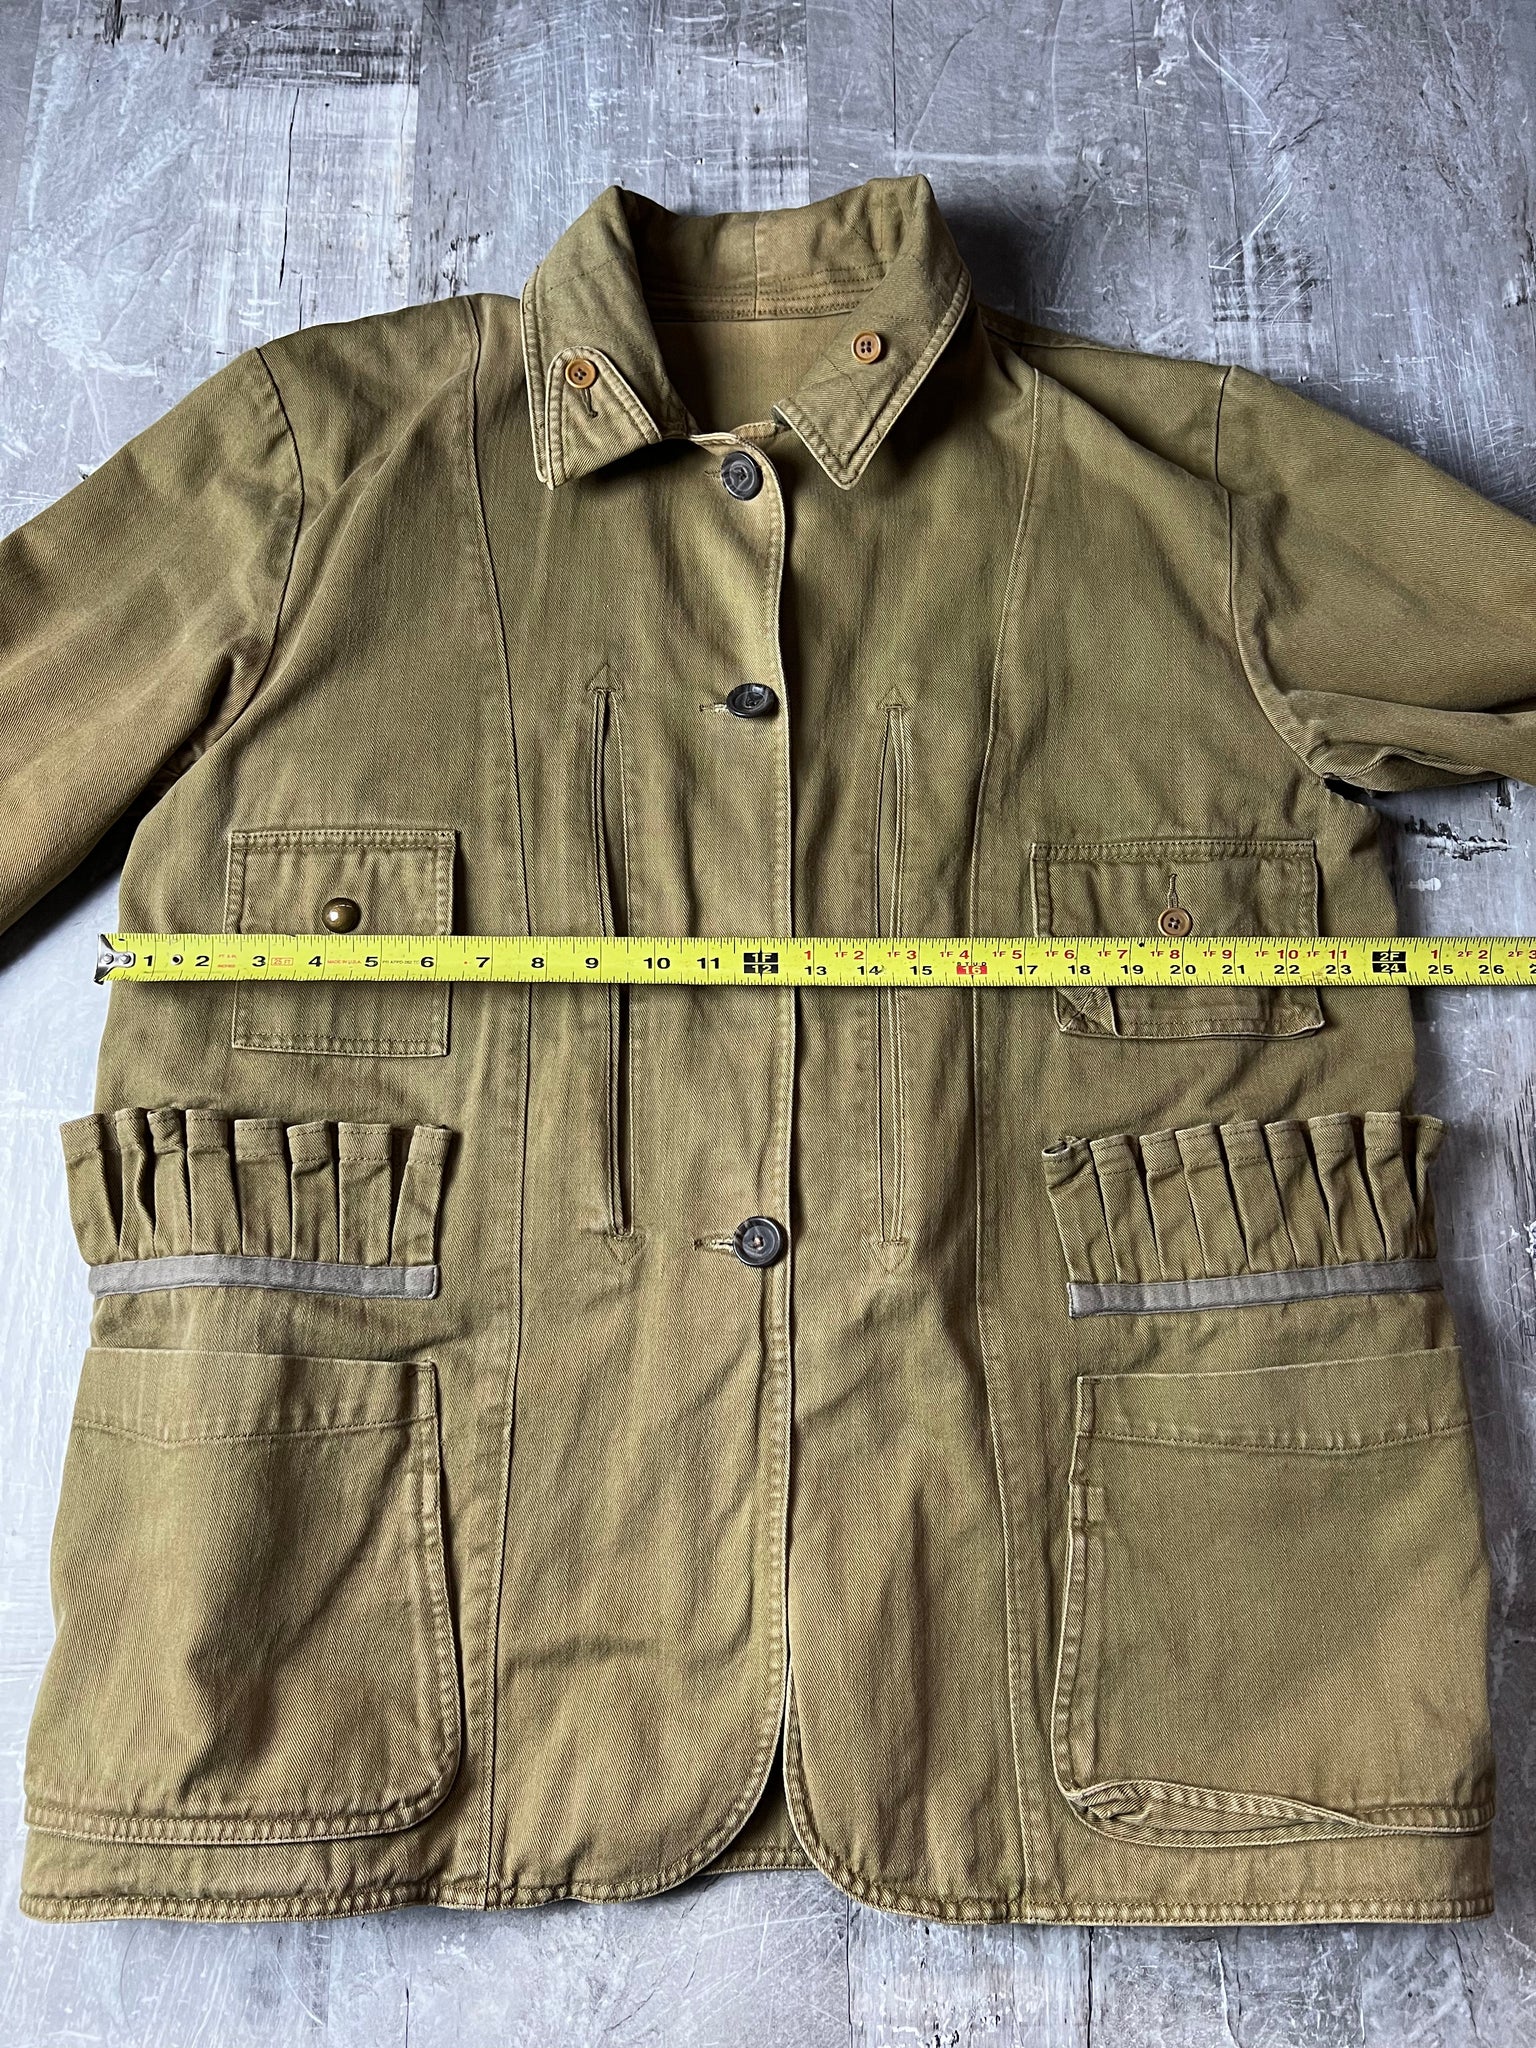 90’s Polo Ralph Lauren reversible hunting jacket XL